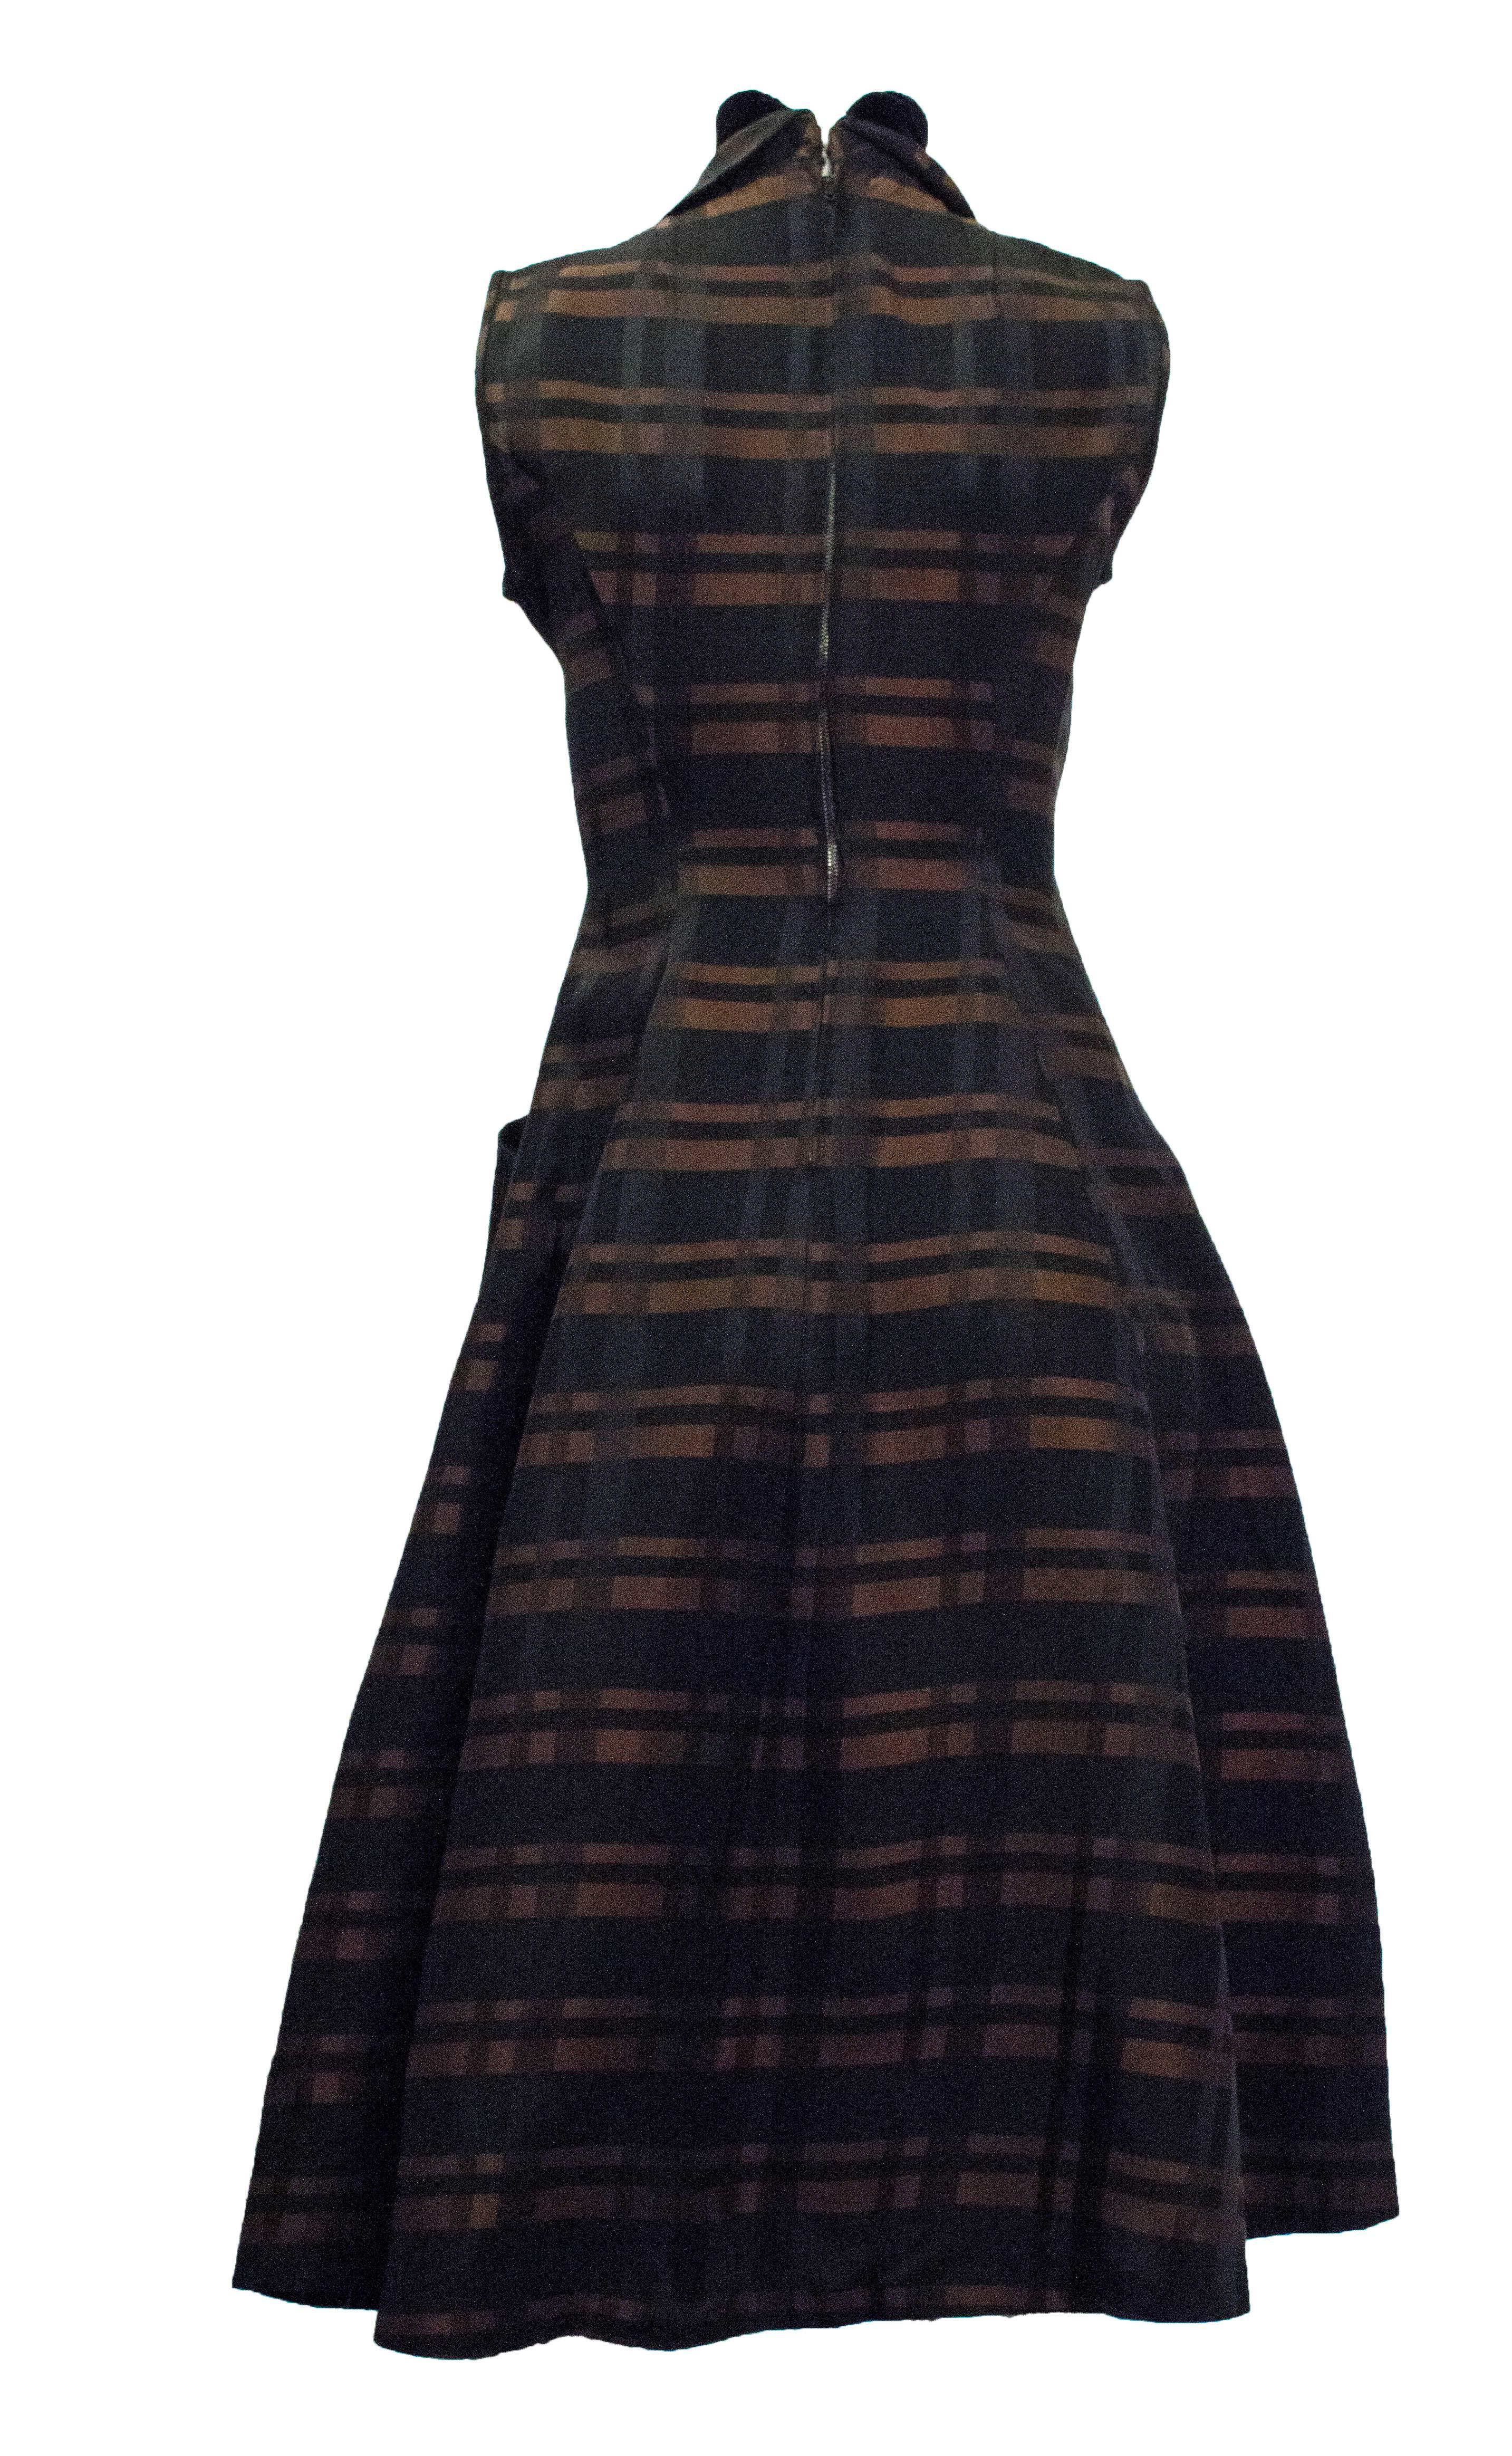 50s Bronze and Black Plaid Dress with Black Velvet Trim. Stand up collar with velvet bow.